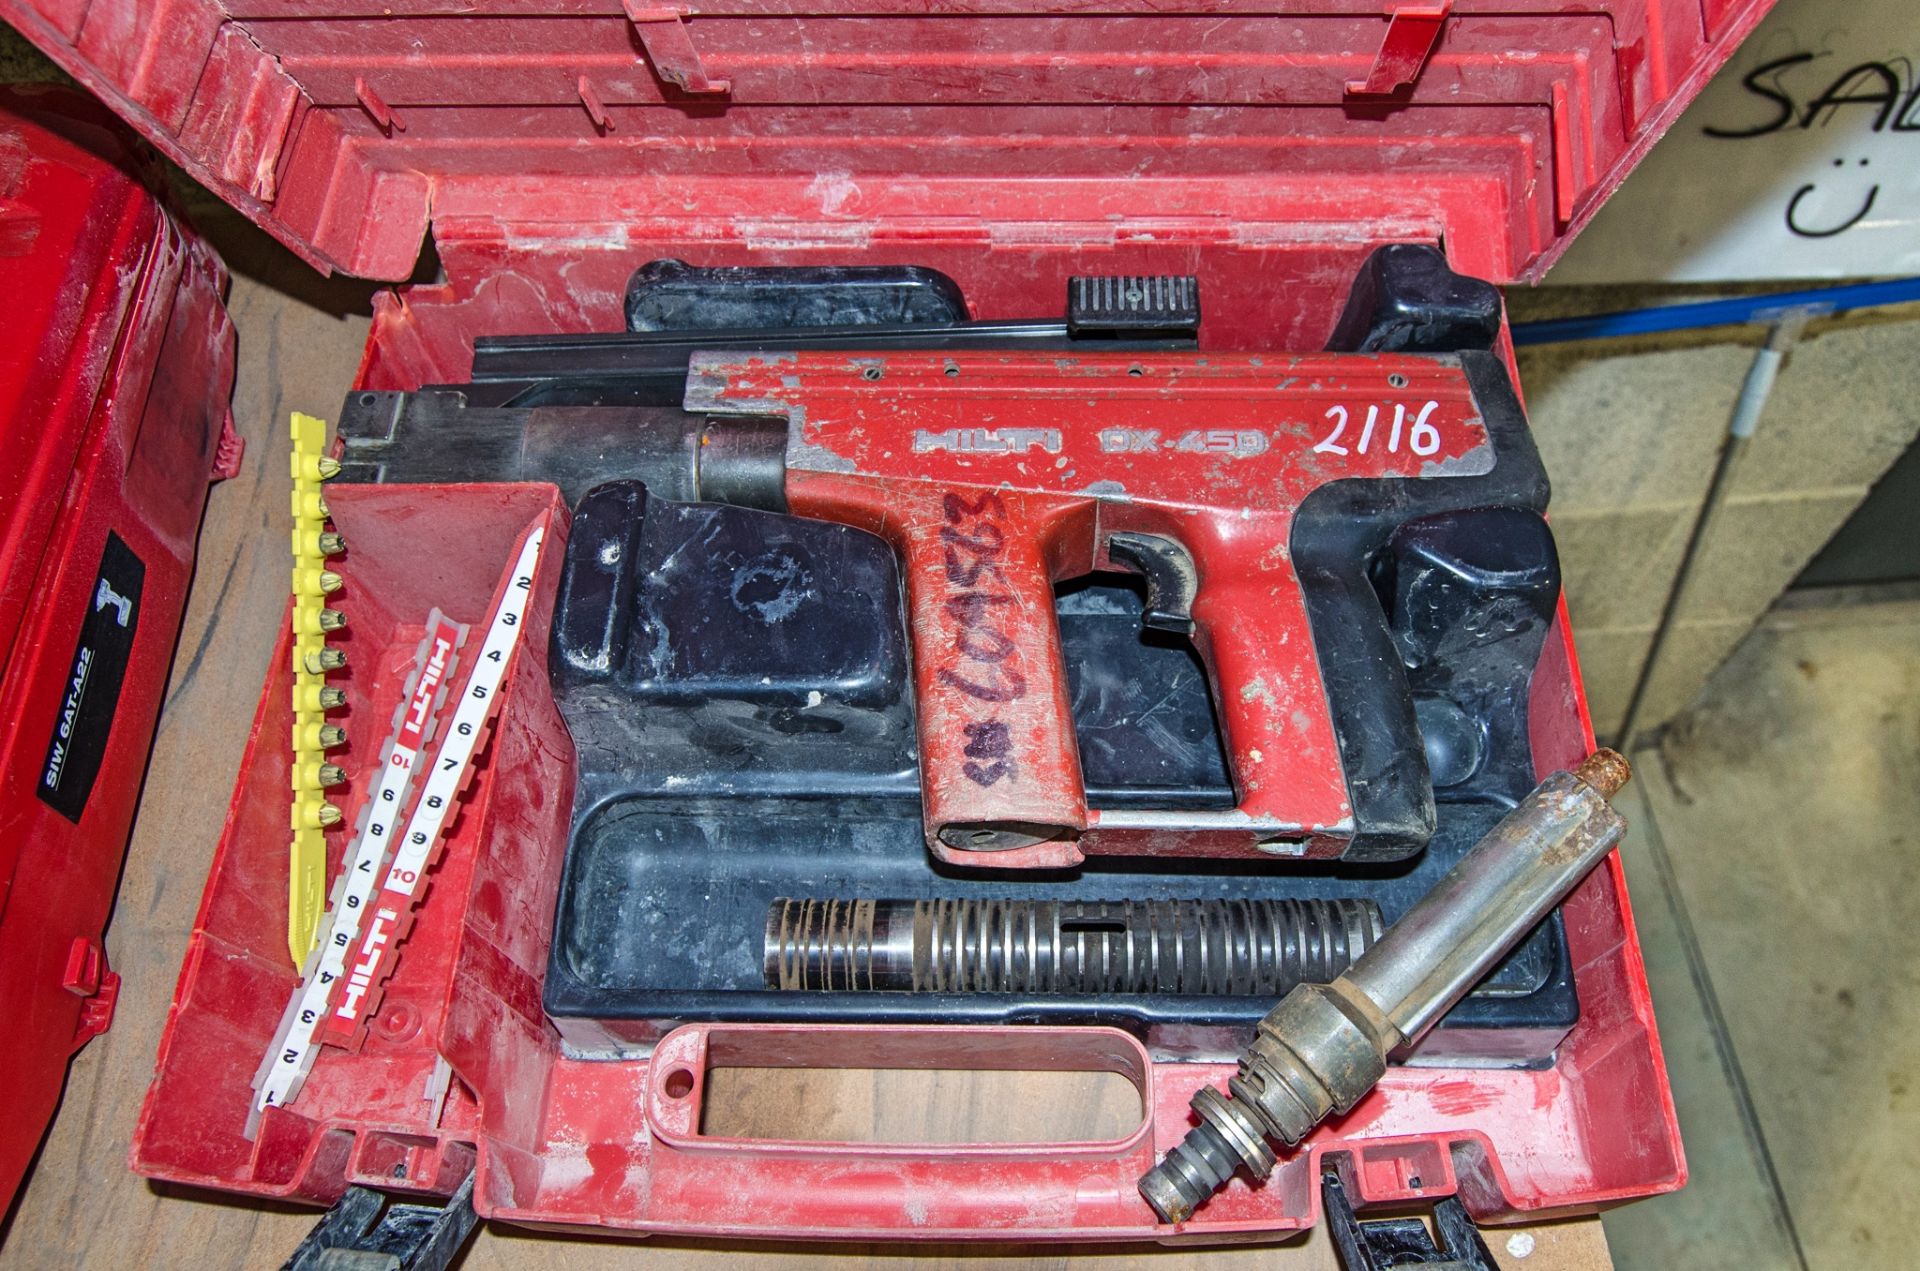 Hilti DX450 nail gun c/w carry case CC9563